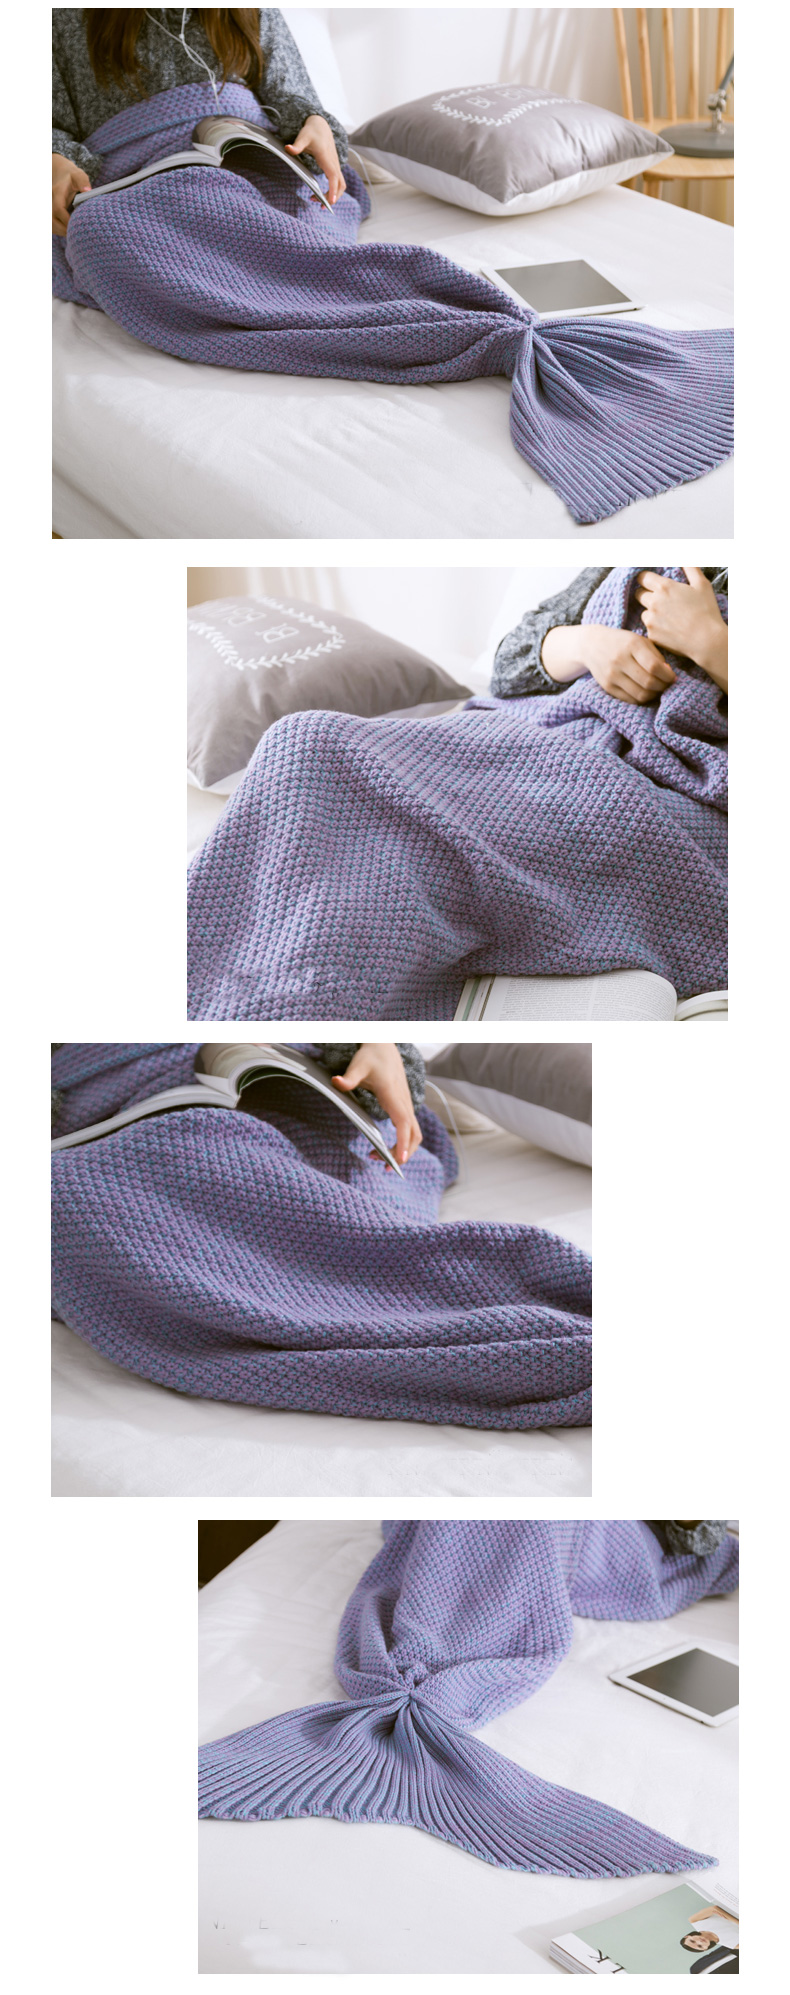 Honana-WX-29-3-Size-Yarn-Knitting-Mermaid-Tail-Blankets-Fibers-Warm-Soft-Home-Office-Sleep-Bag-Bed-M-1093602-3